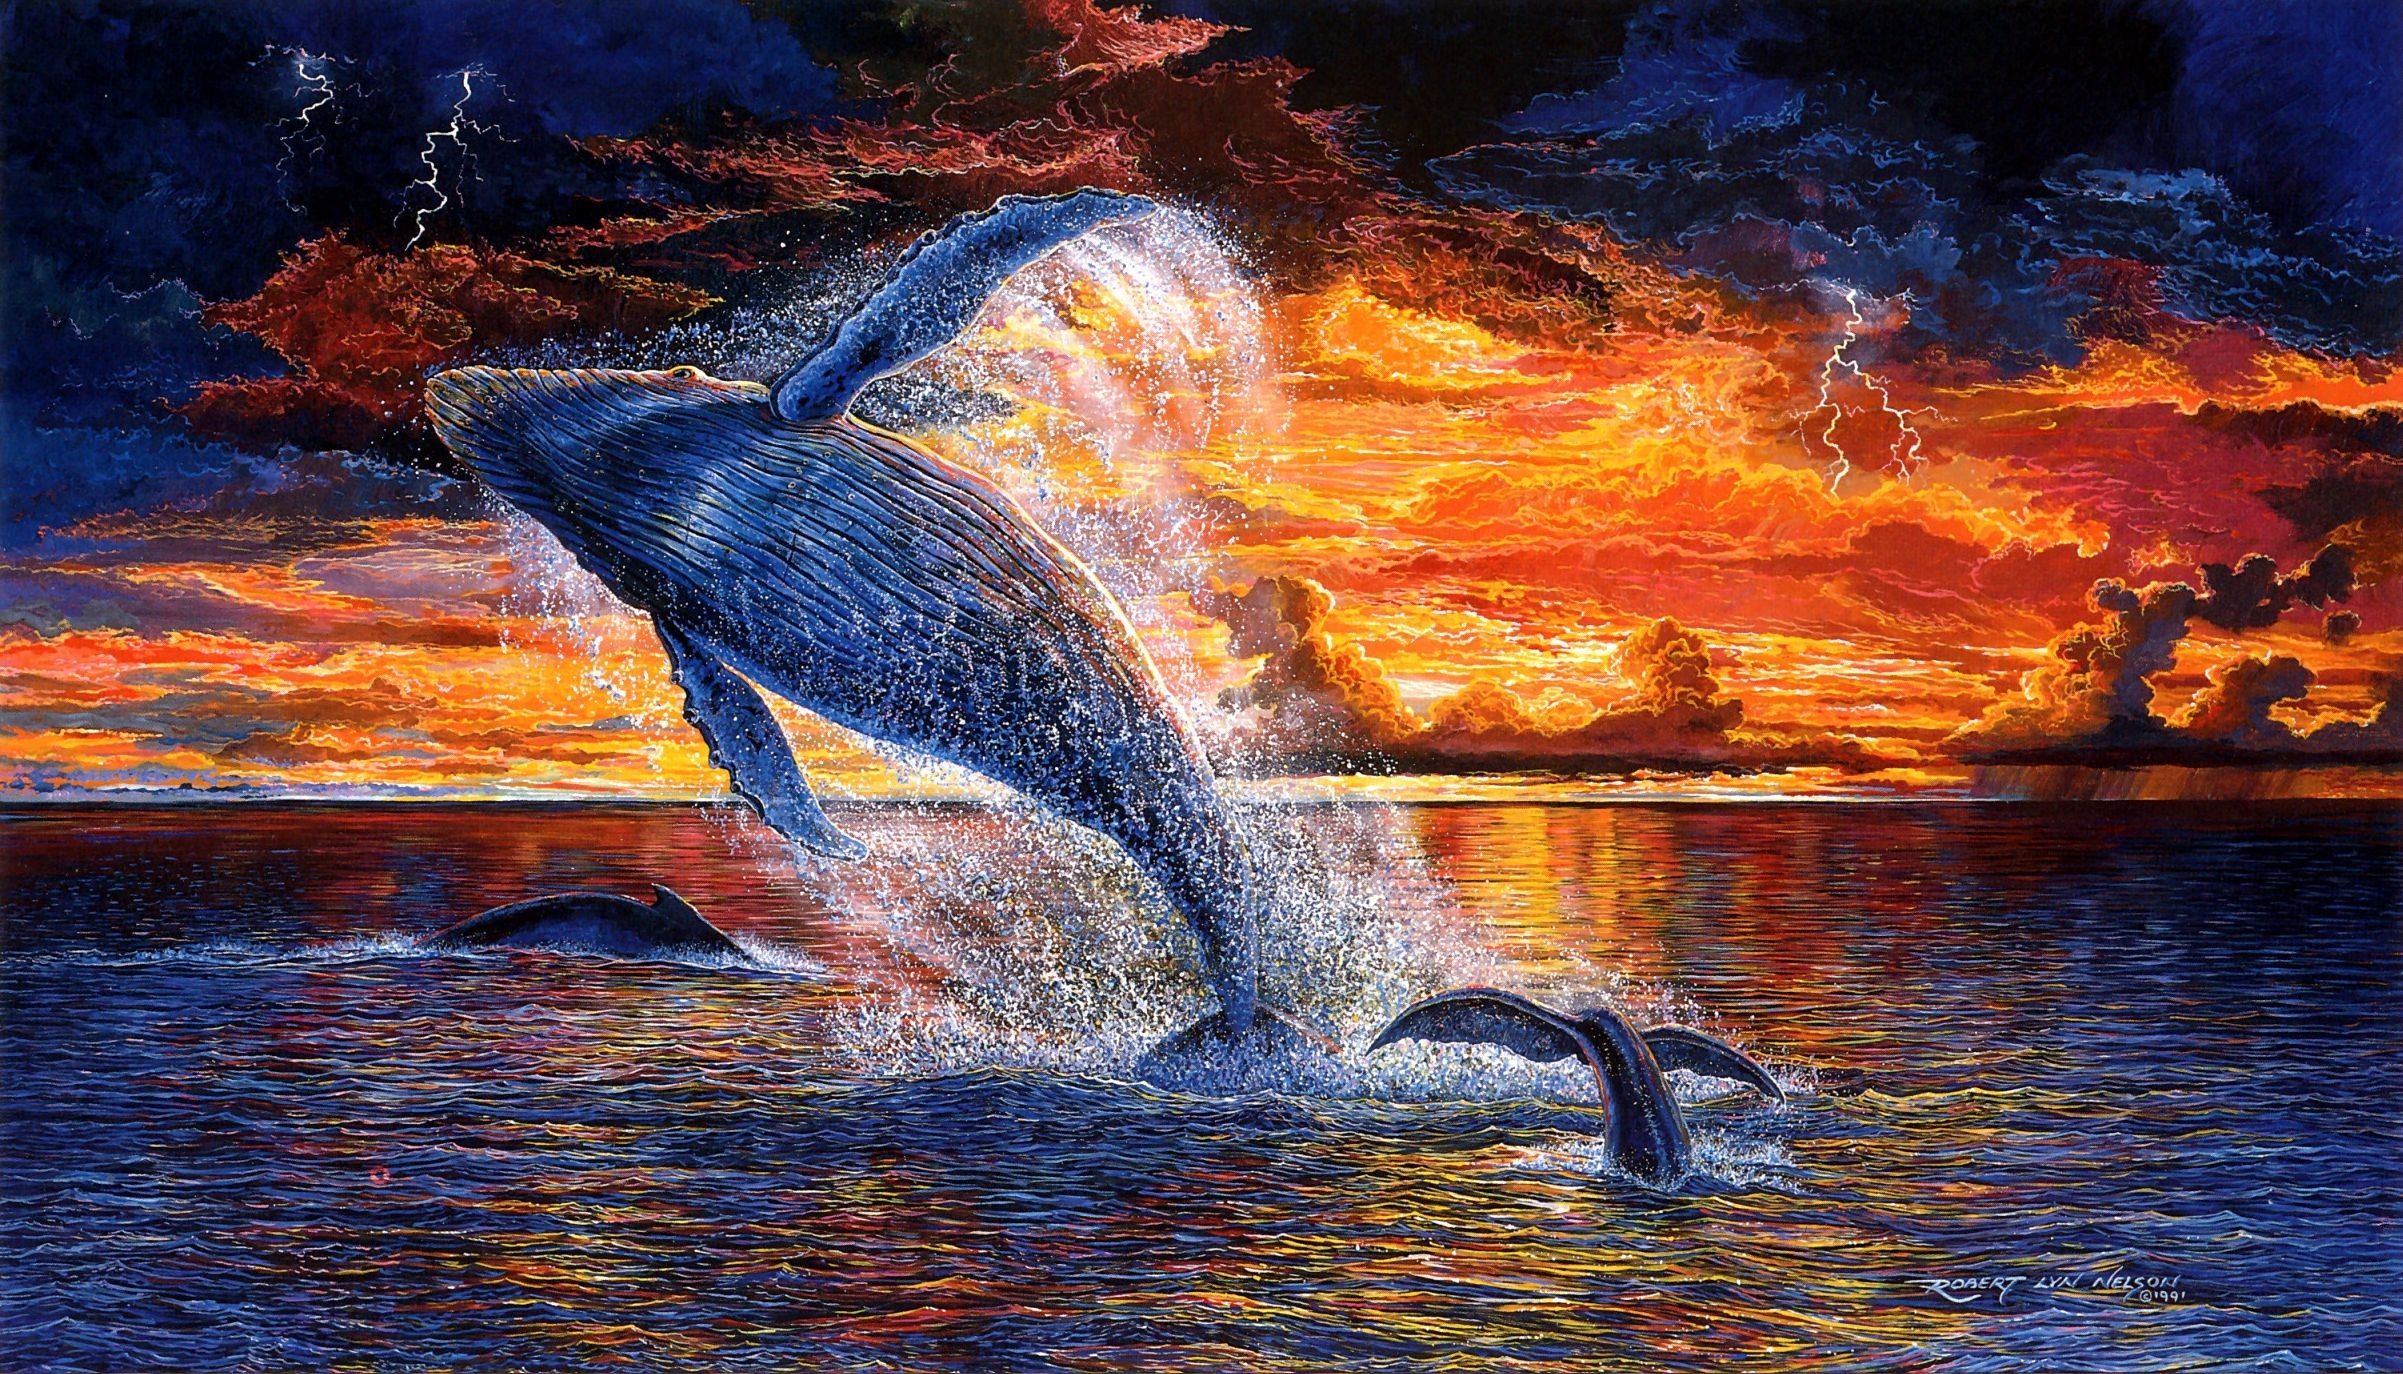 whales artwork colors bodykit 2403x1374 wallpaper High Quality Wallpaper, High Definition Wallpaper